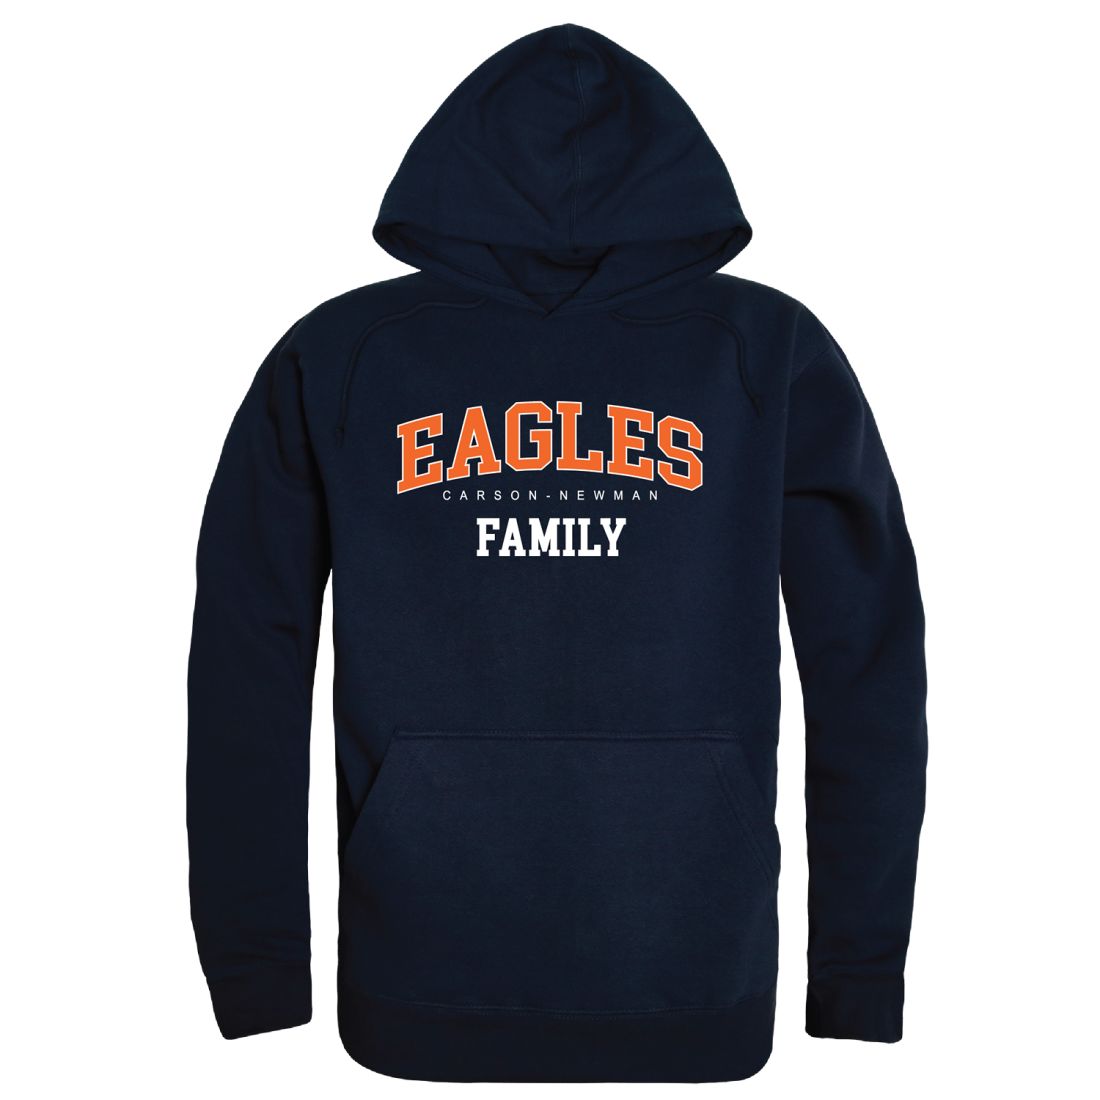 Carson-Newman University Eagles Family Hoodie Sweatshirts